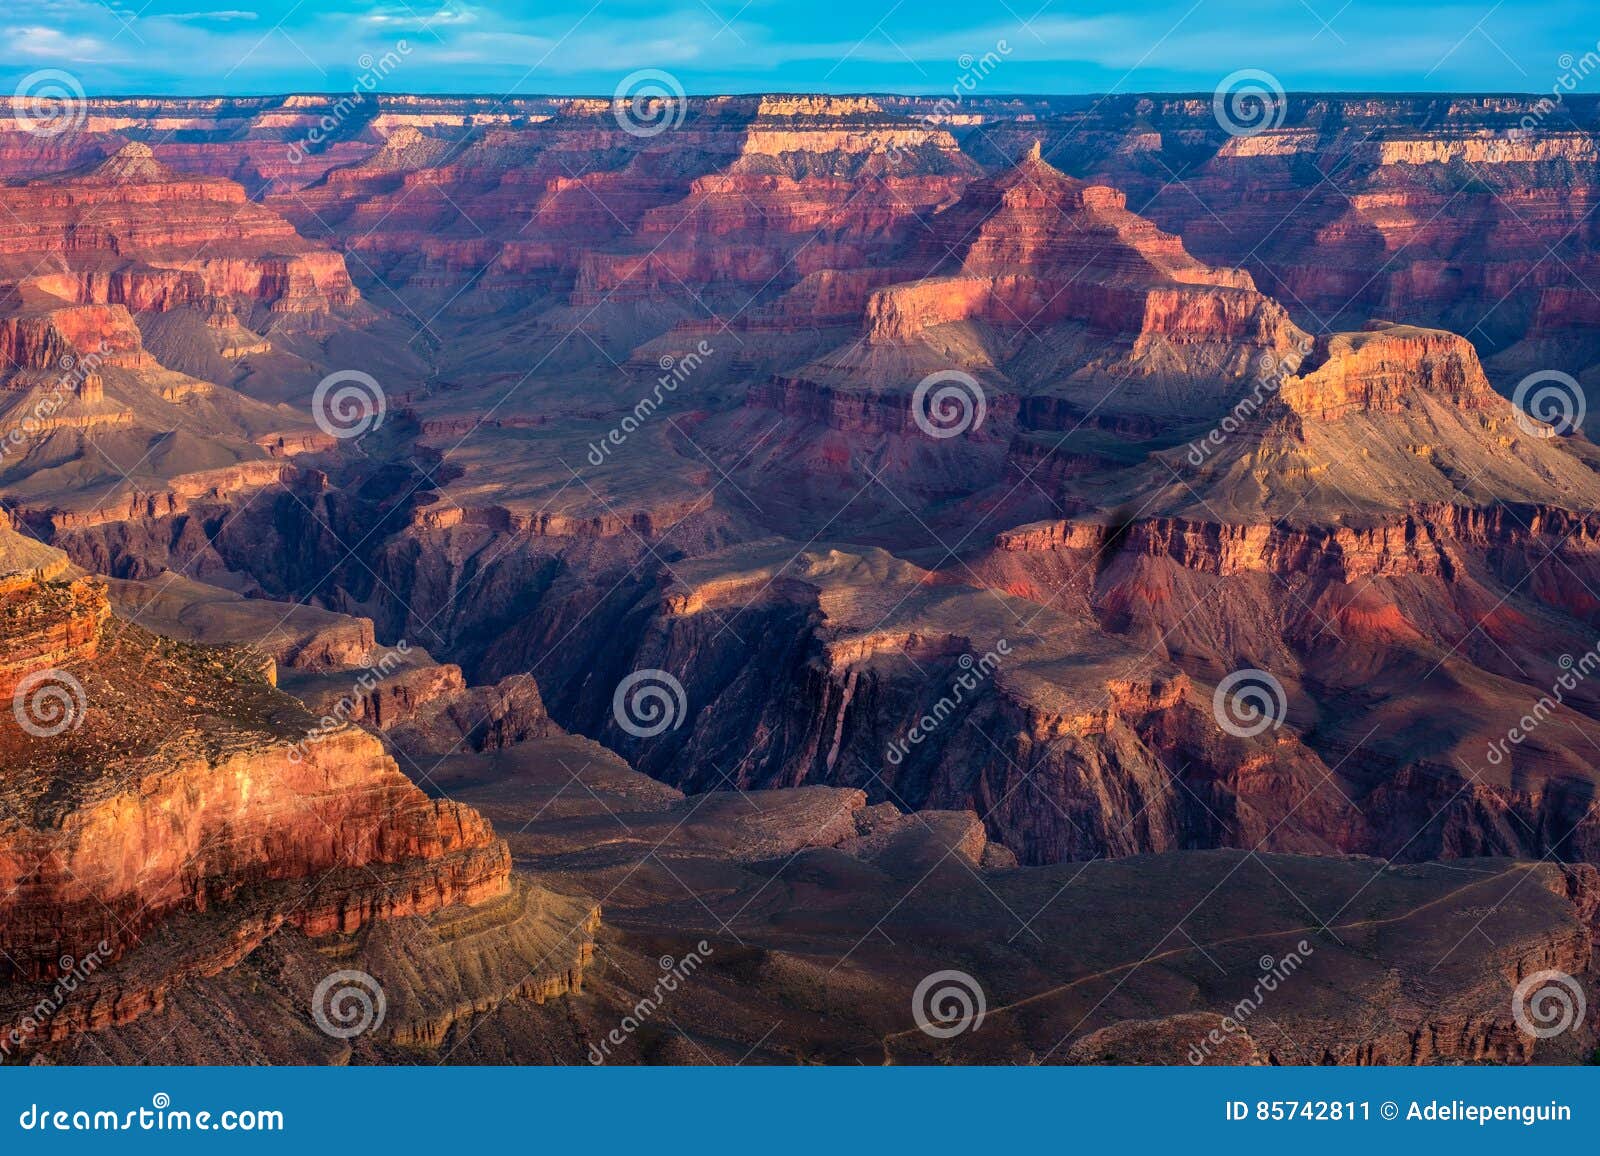 grand canyon national park vista, arizona